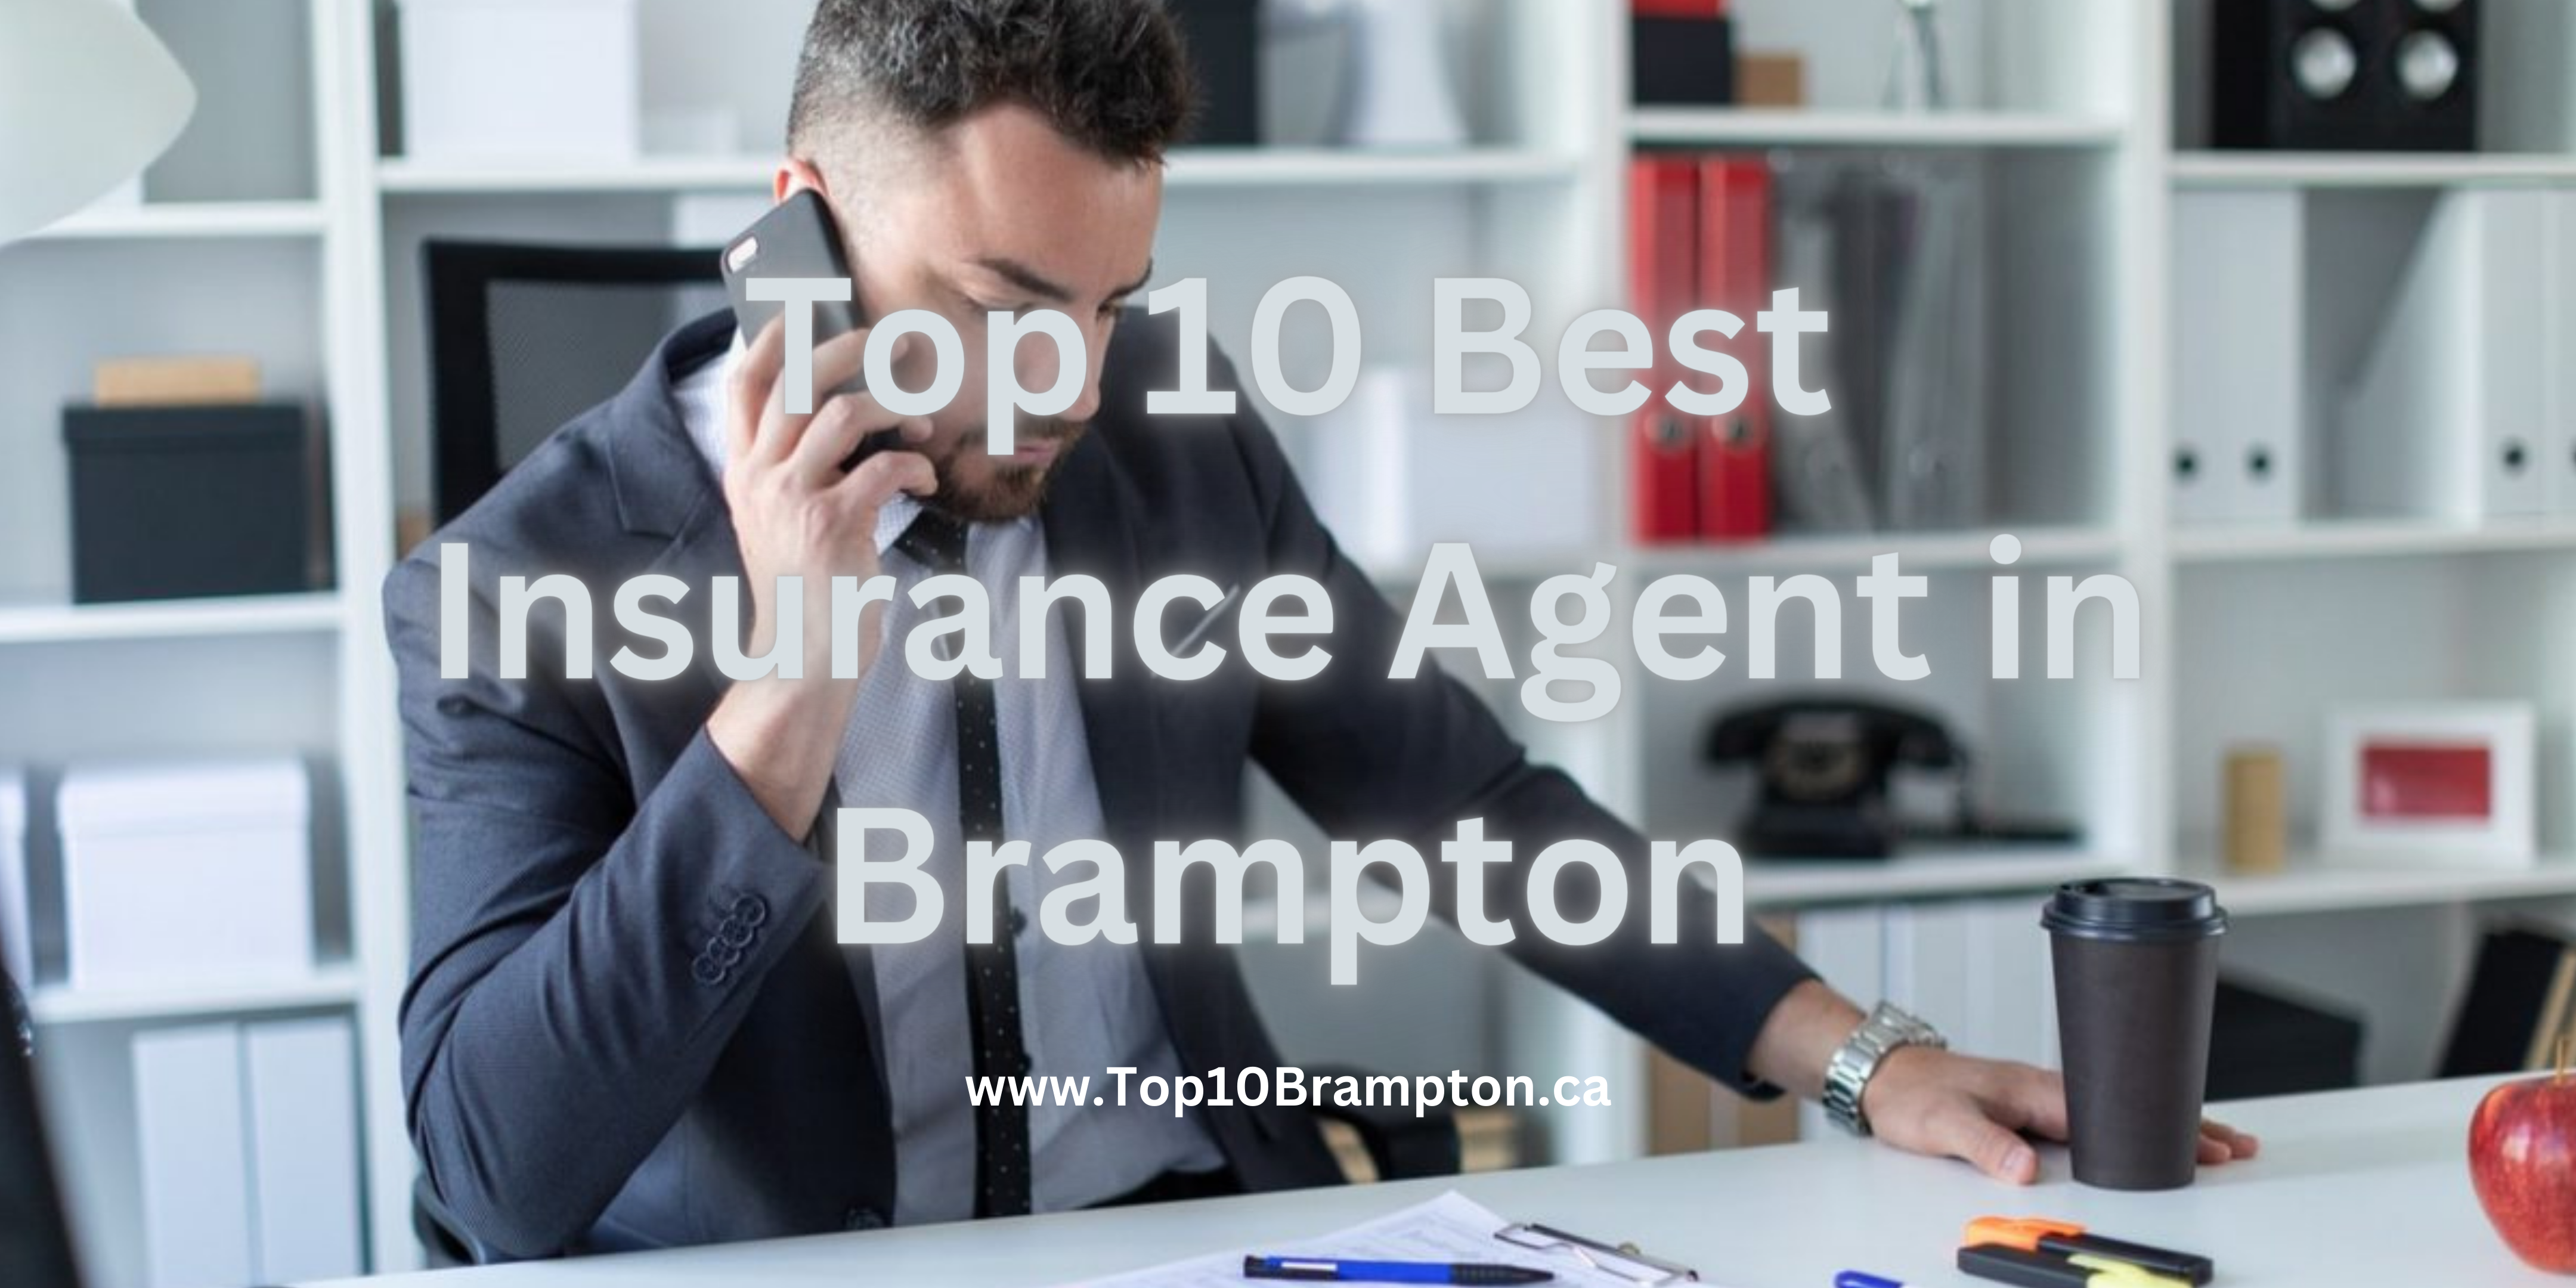 Best Insurance Agent in Brampton